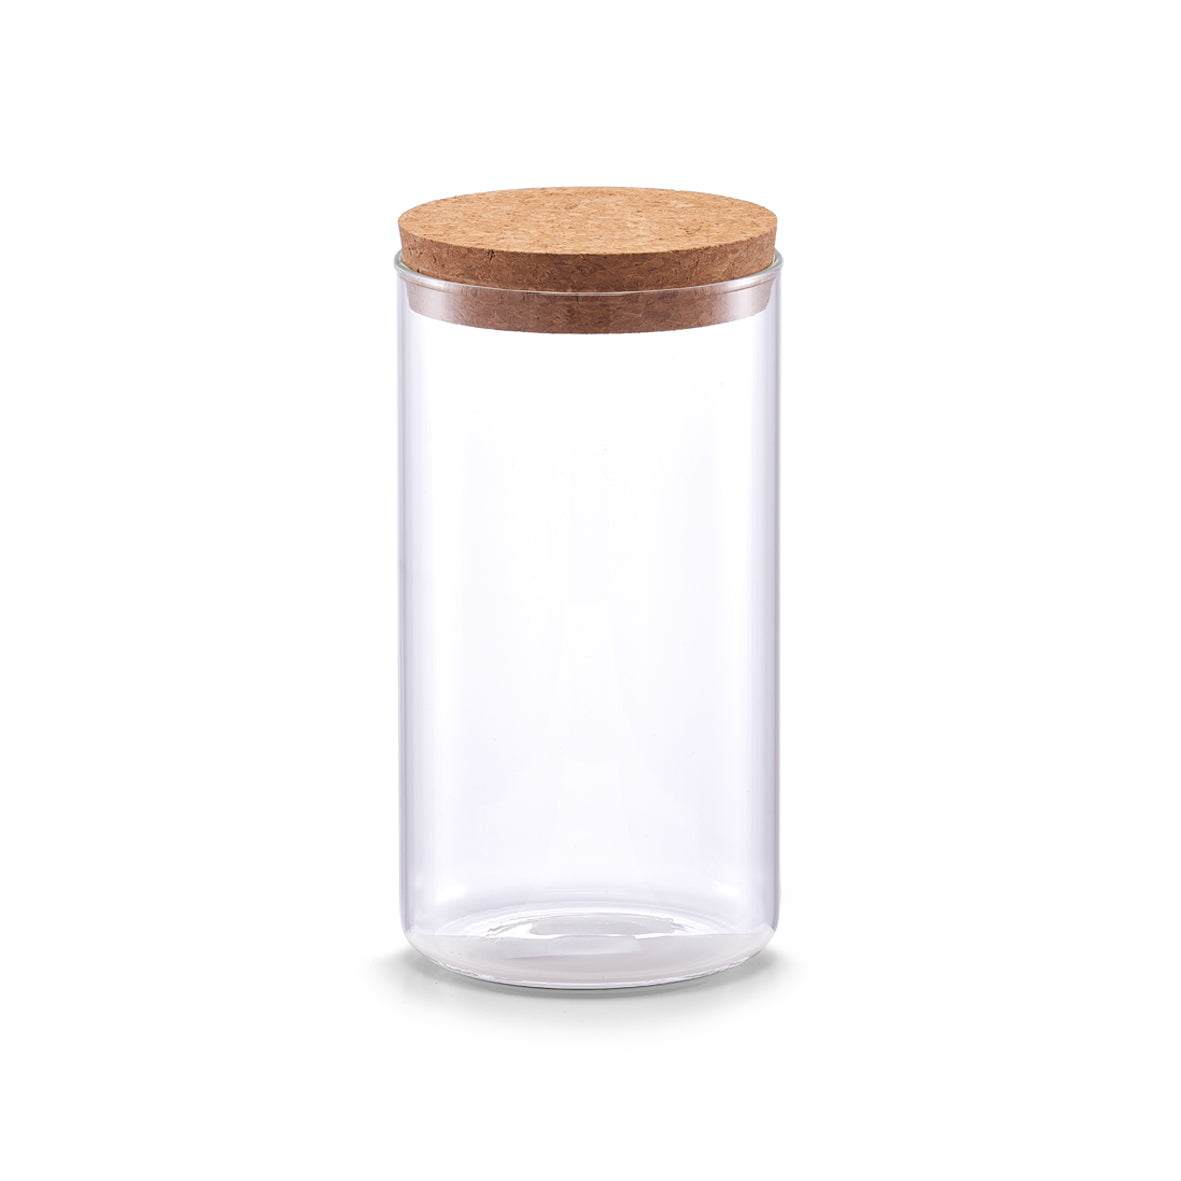 Zeller Present Vorratsglas mit Korkdeckel | HORST | Vorratsgläser